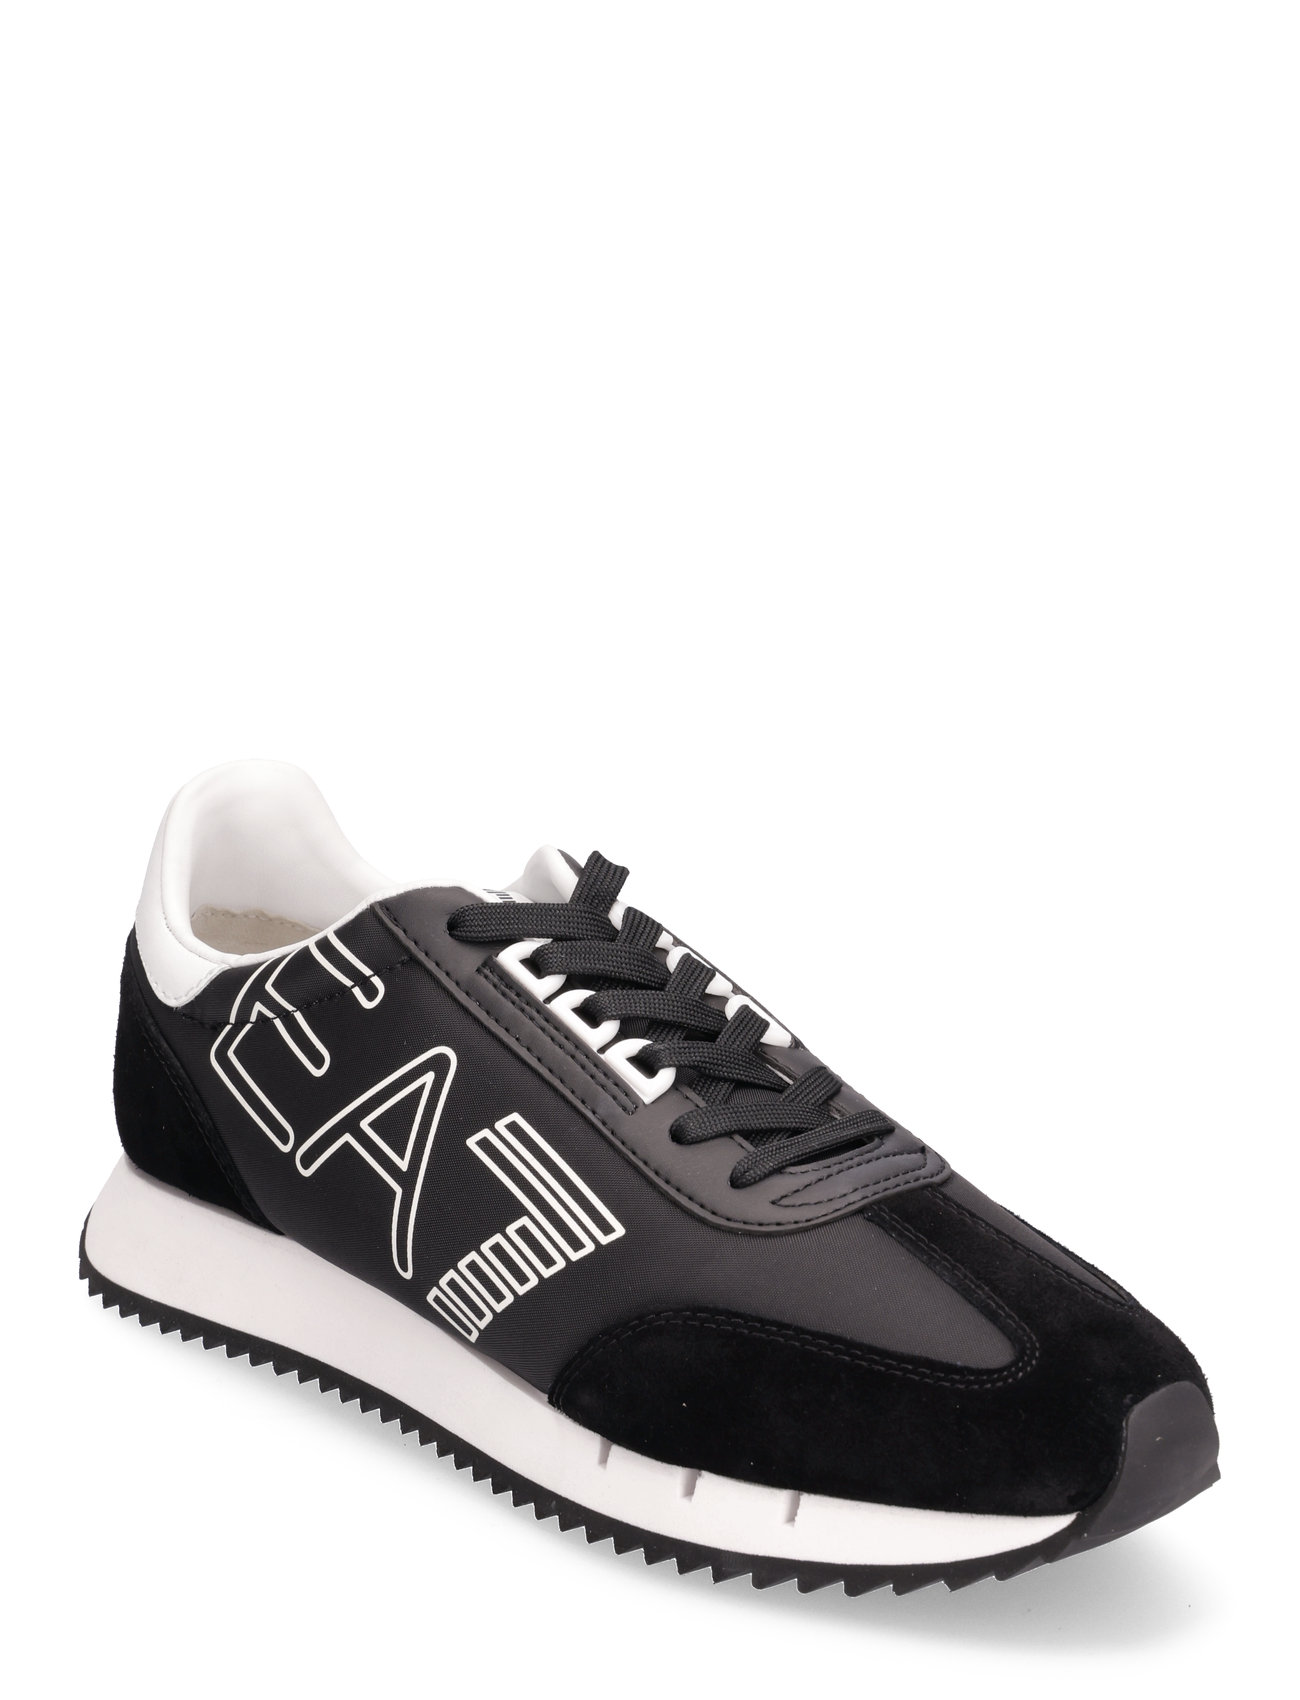 EA7 Black & White Lace Up Sneakers Men | Plutosport